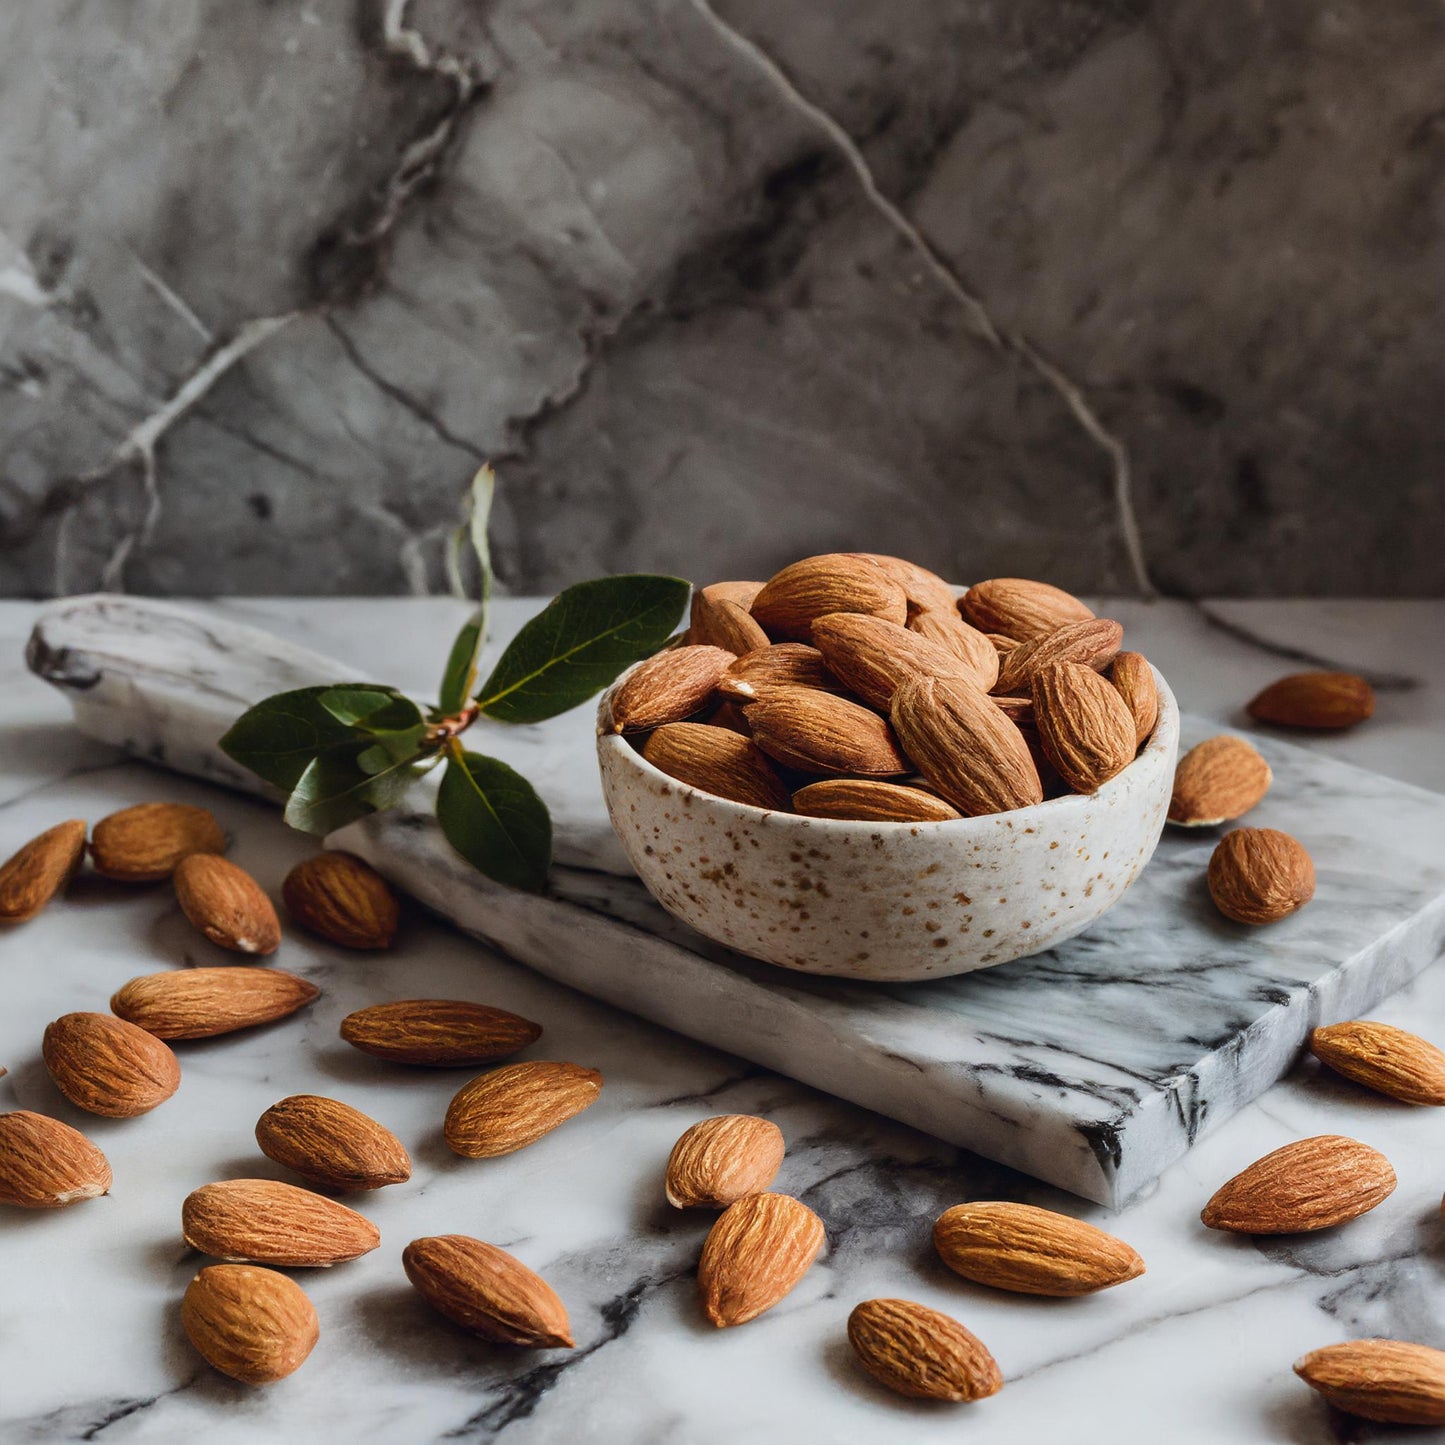 Organic Raw Sicilian Almonds 1kg